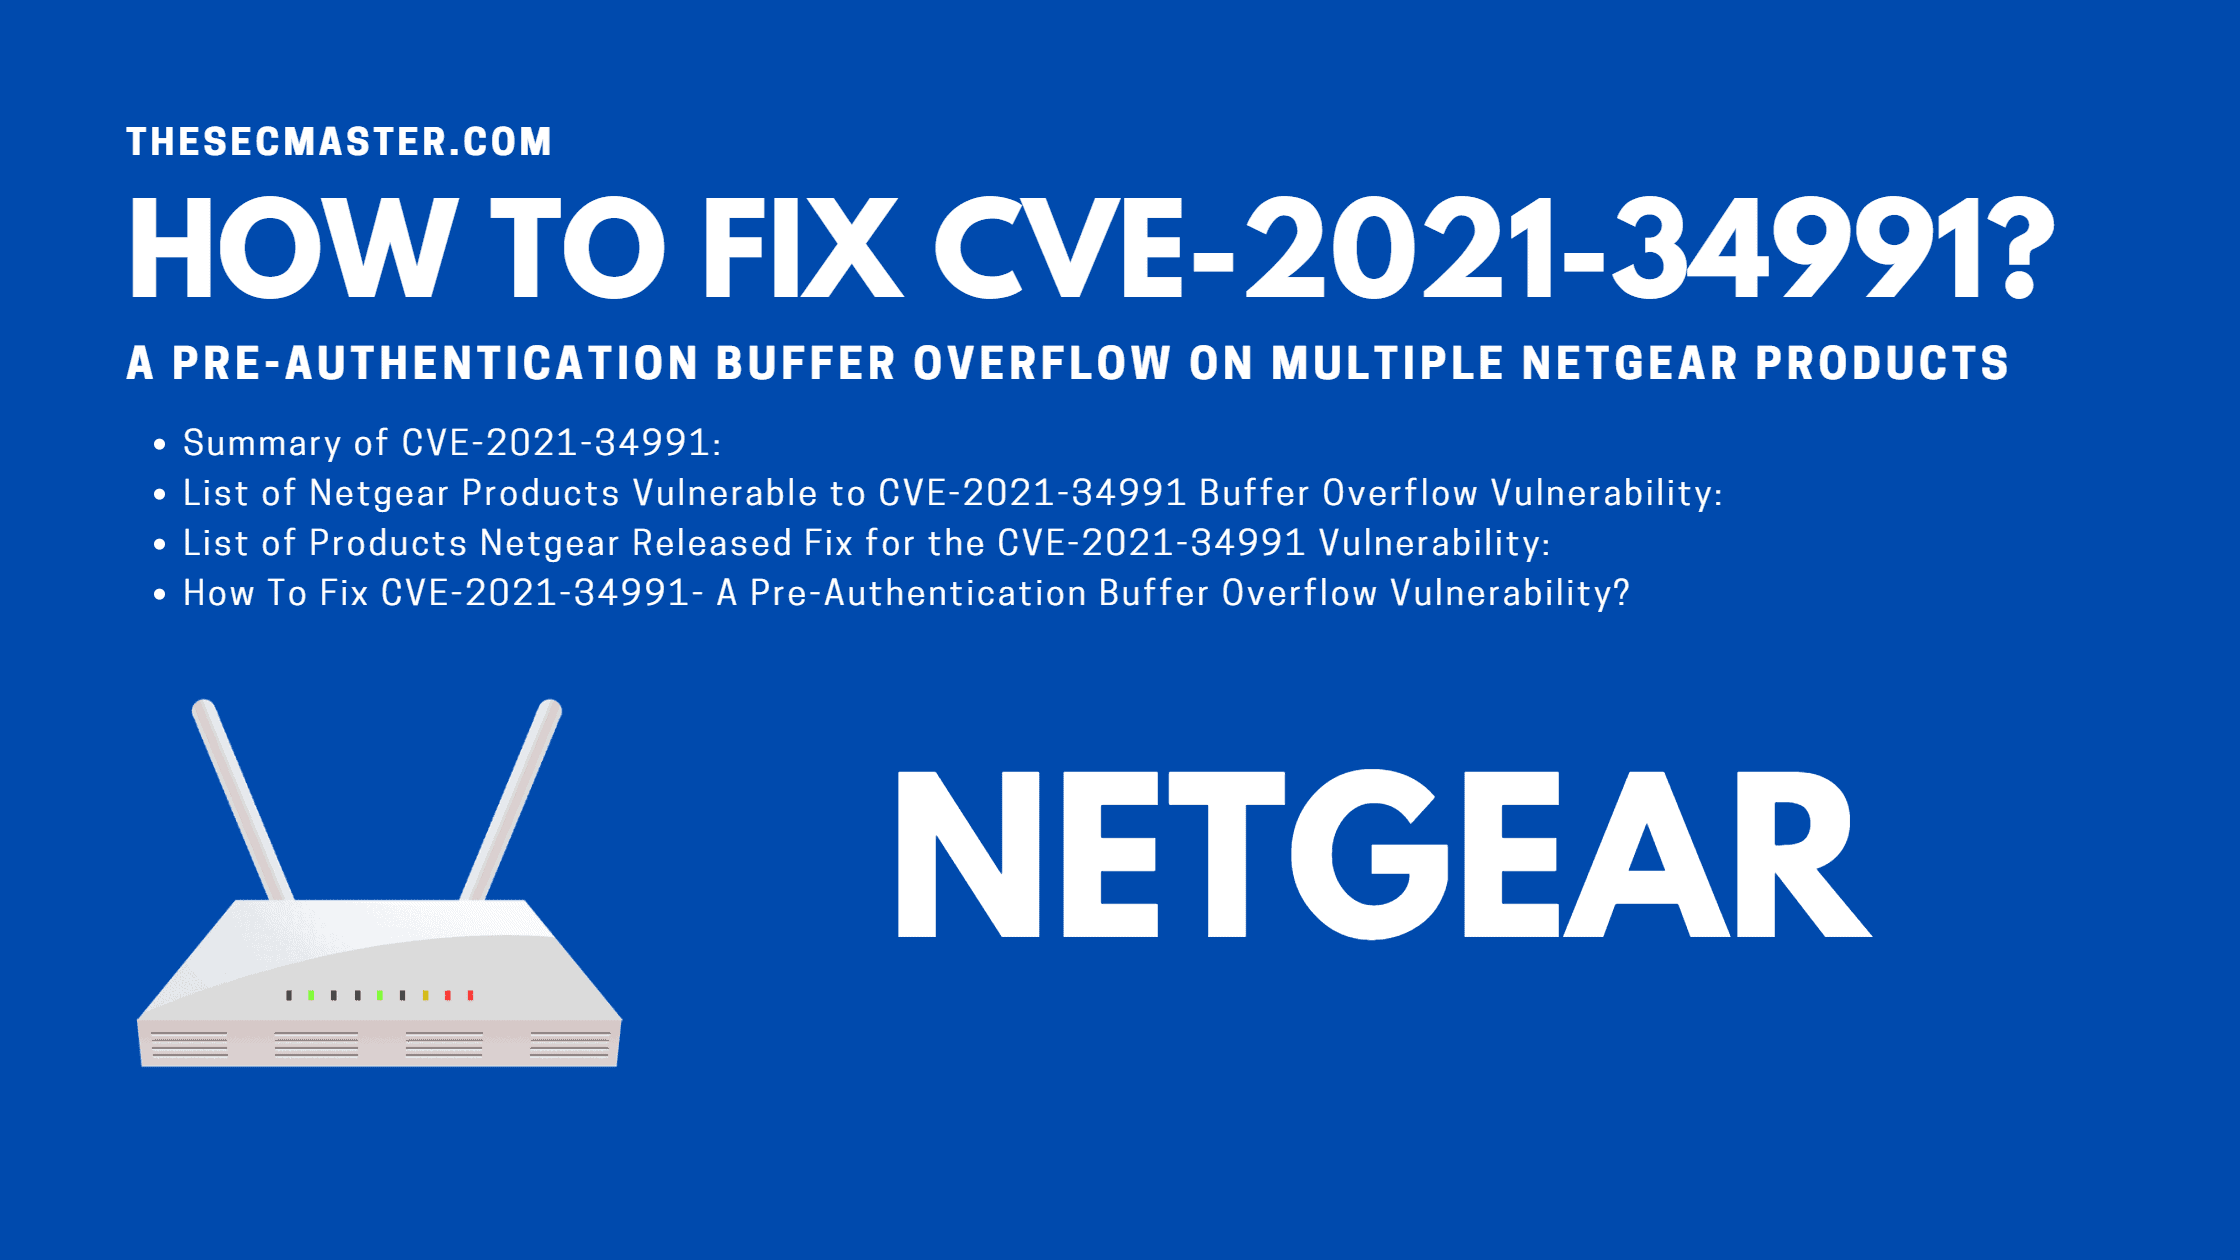 How To Fix Cve 2021 34991 A Pre Authentication Buffer Overflow On Netgear